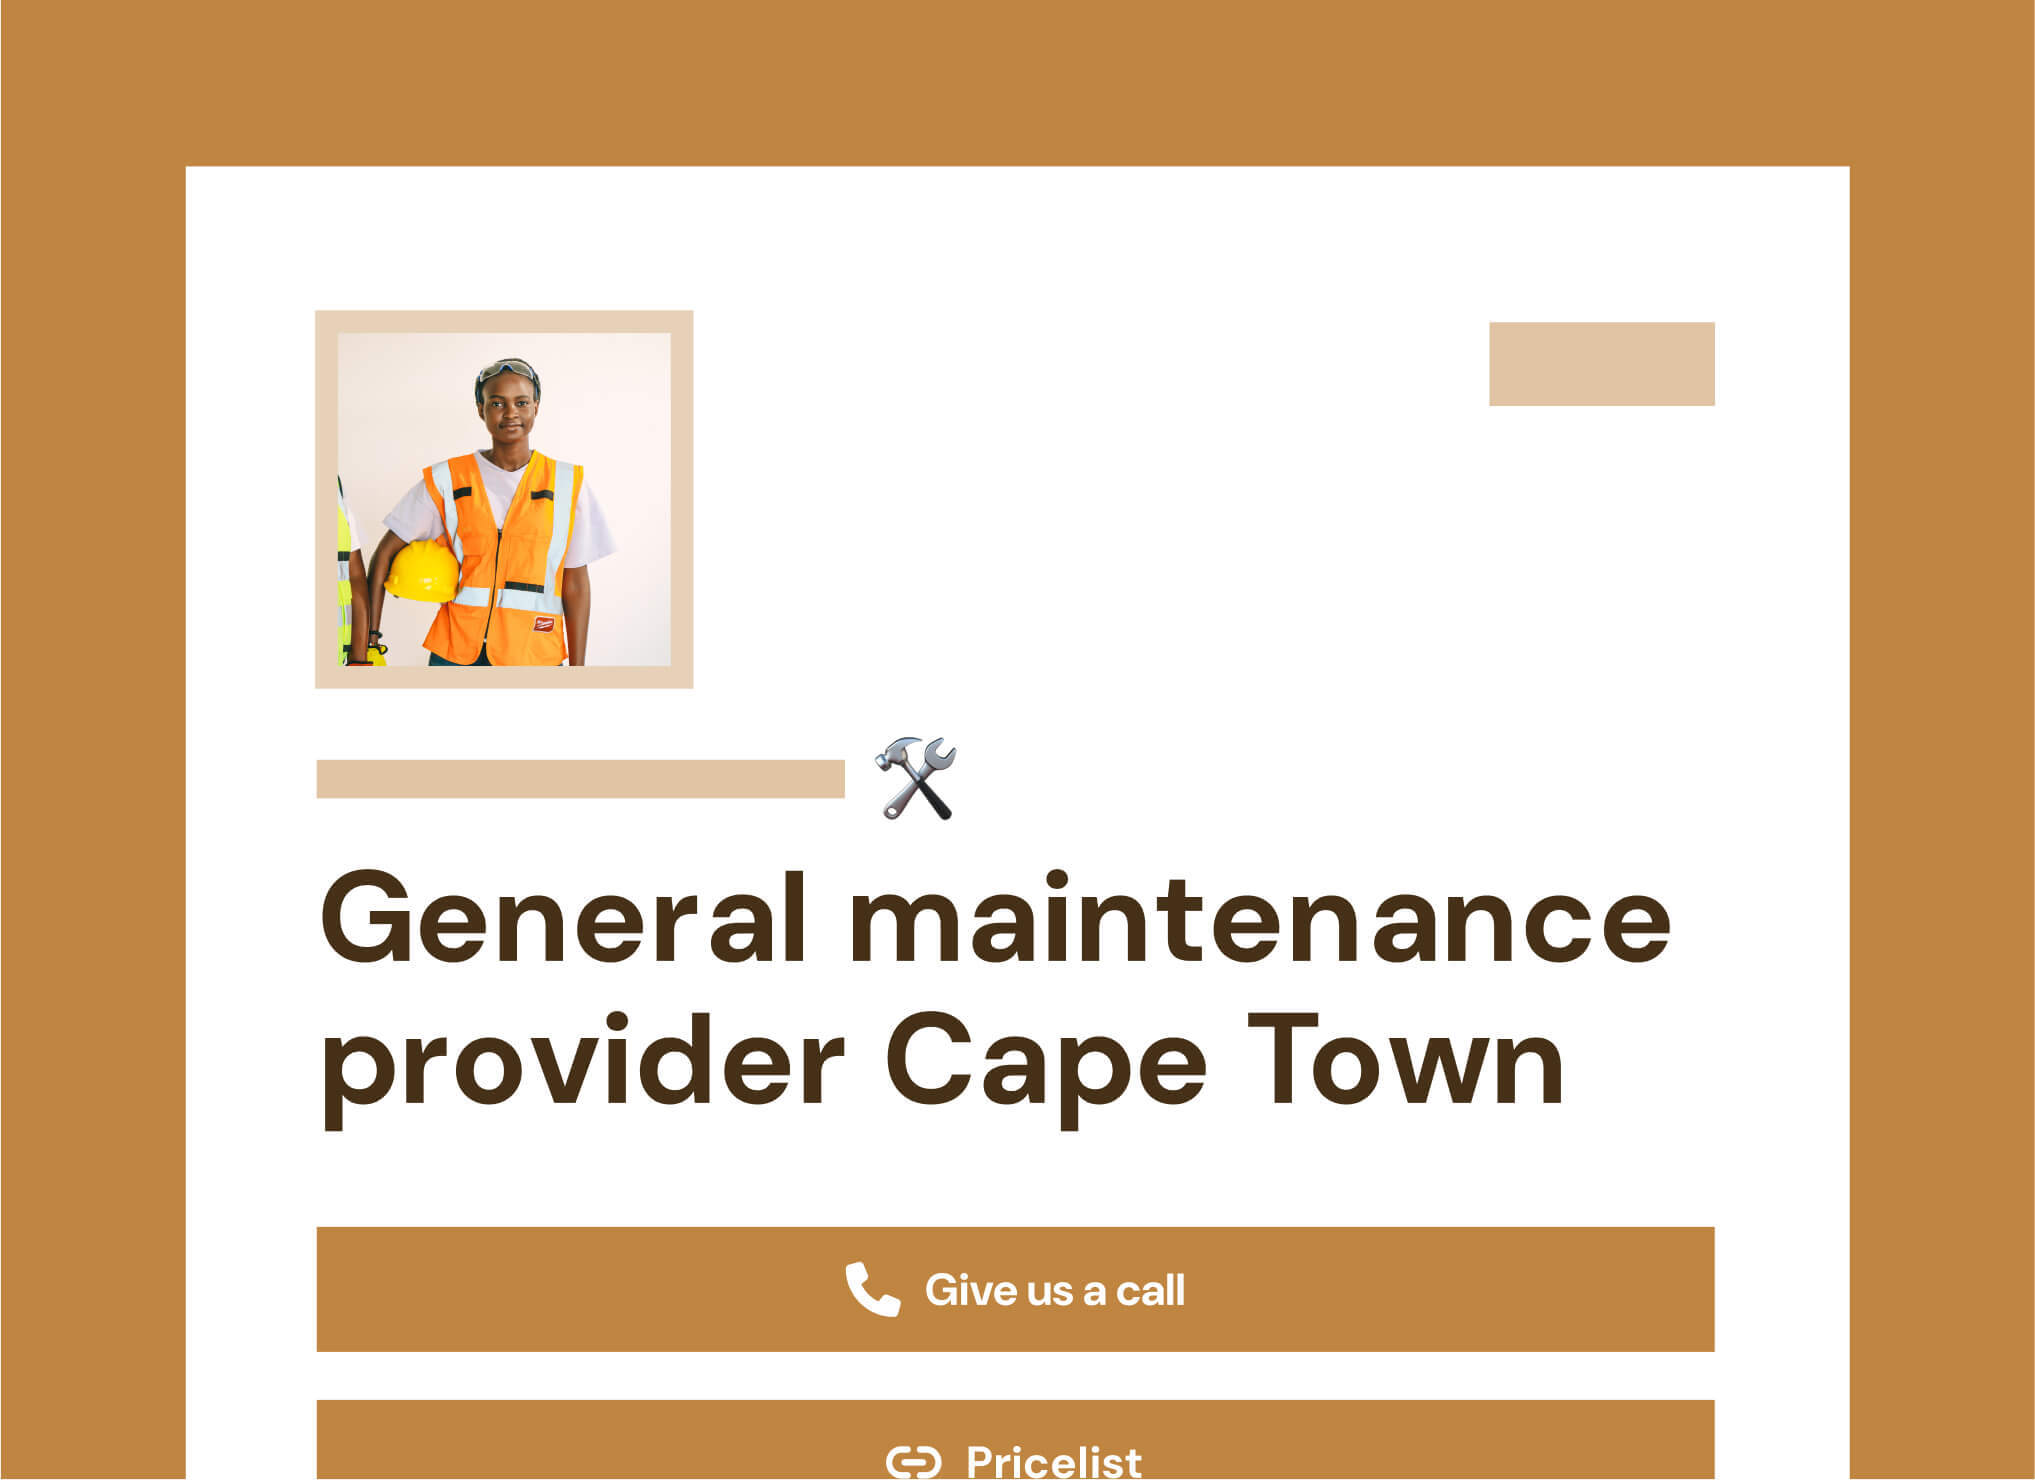 General maintenance service